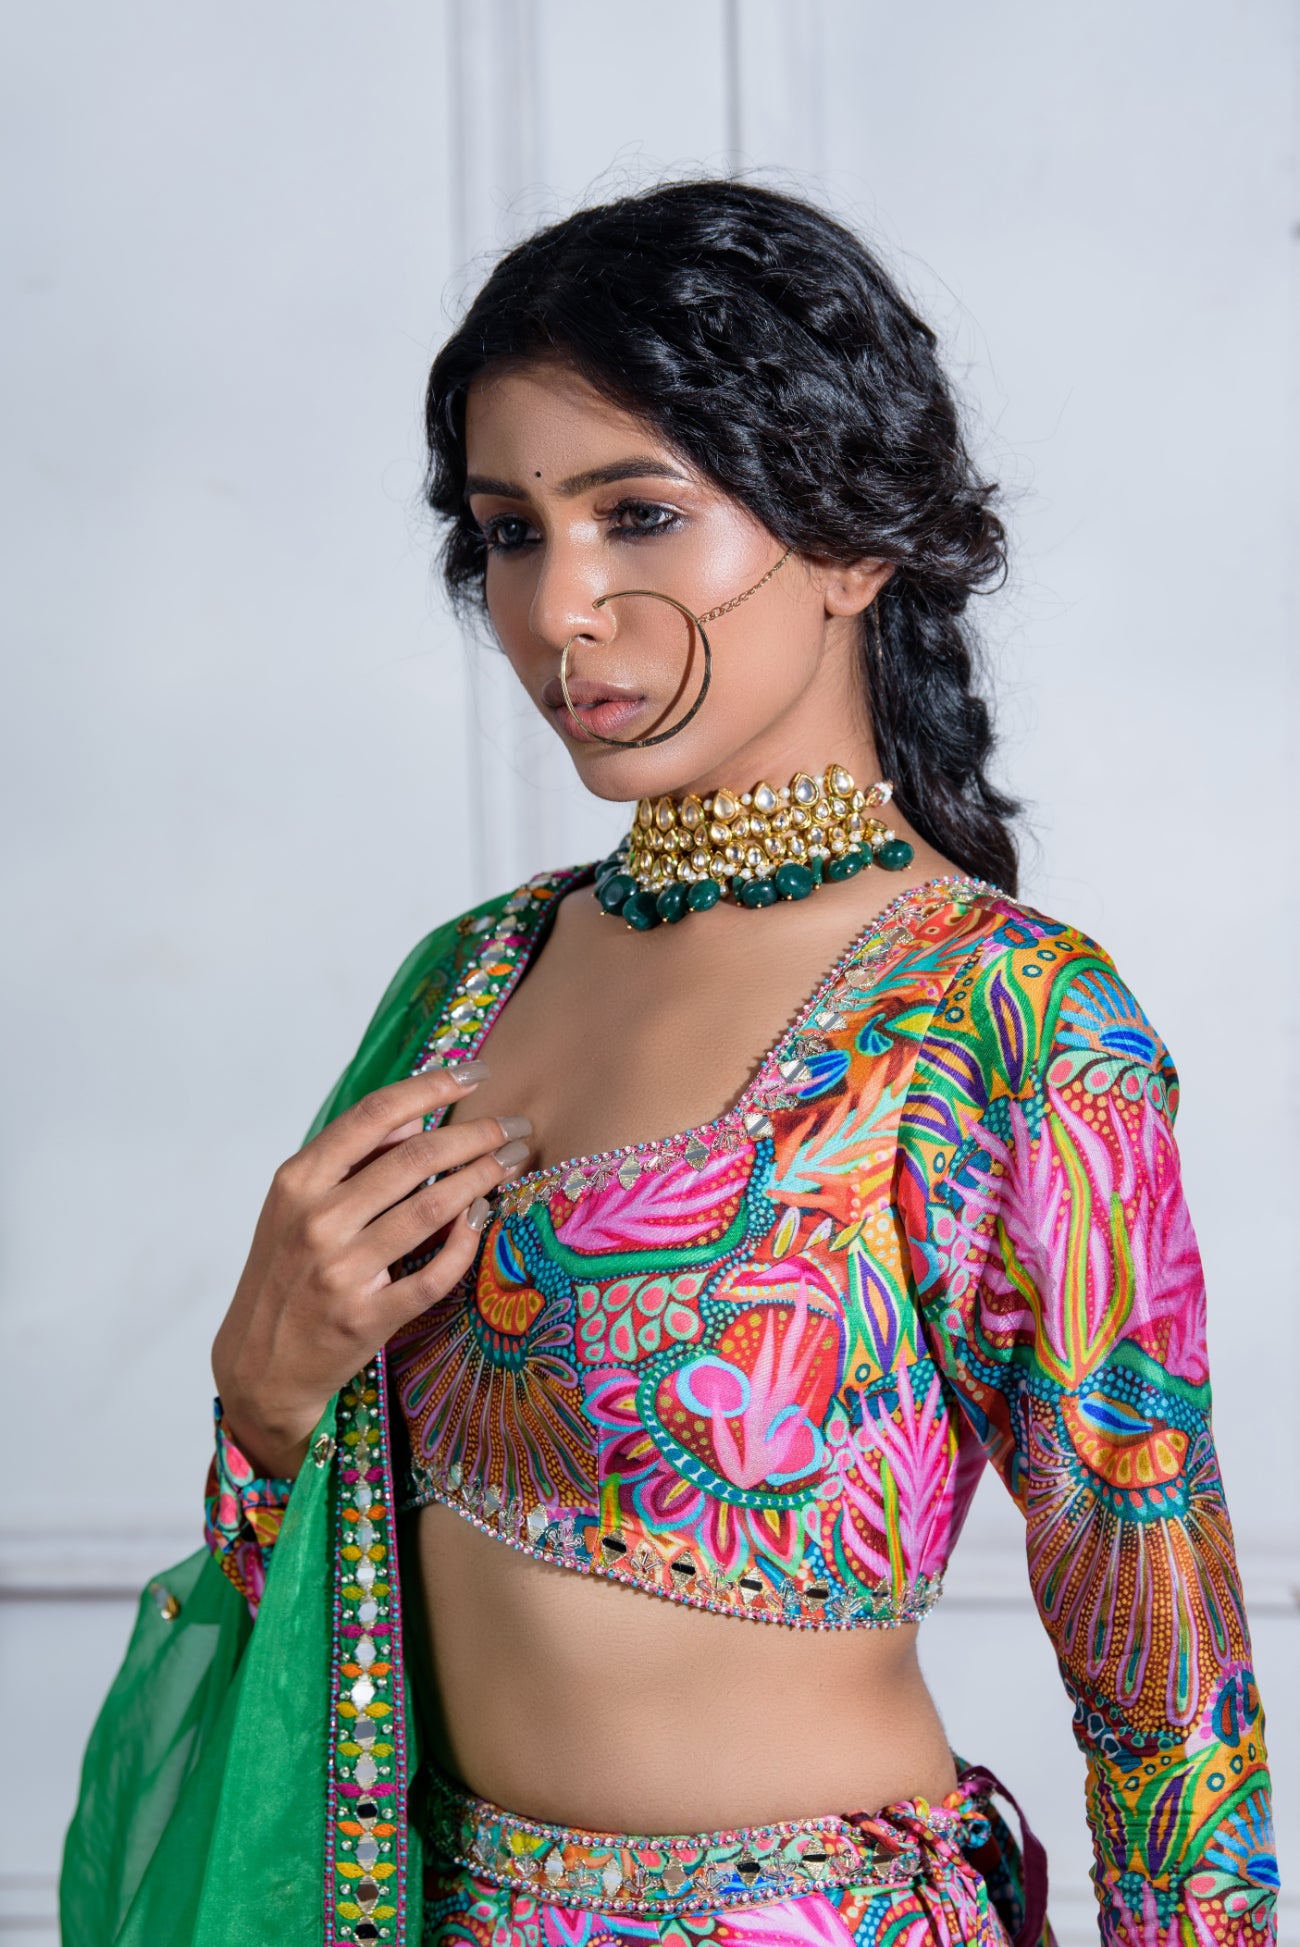 Kali Pocket Lehenga with full sleeve blouse and Contrast Dupatta